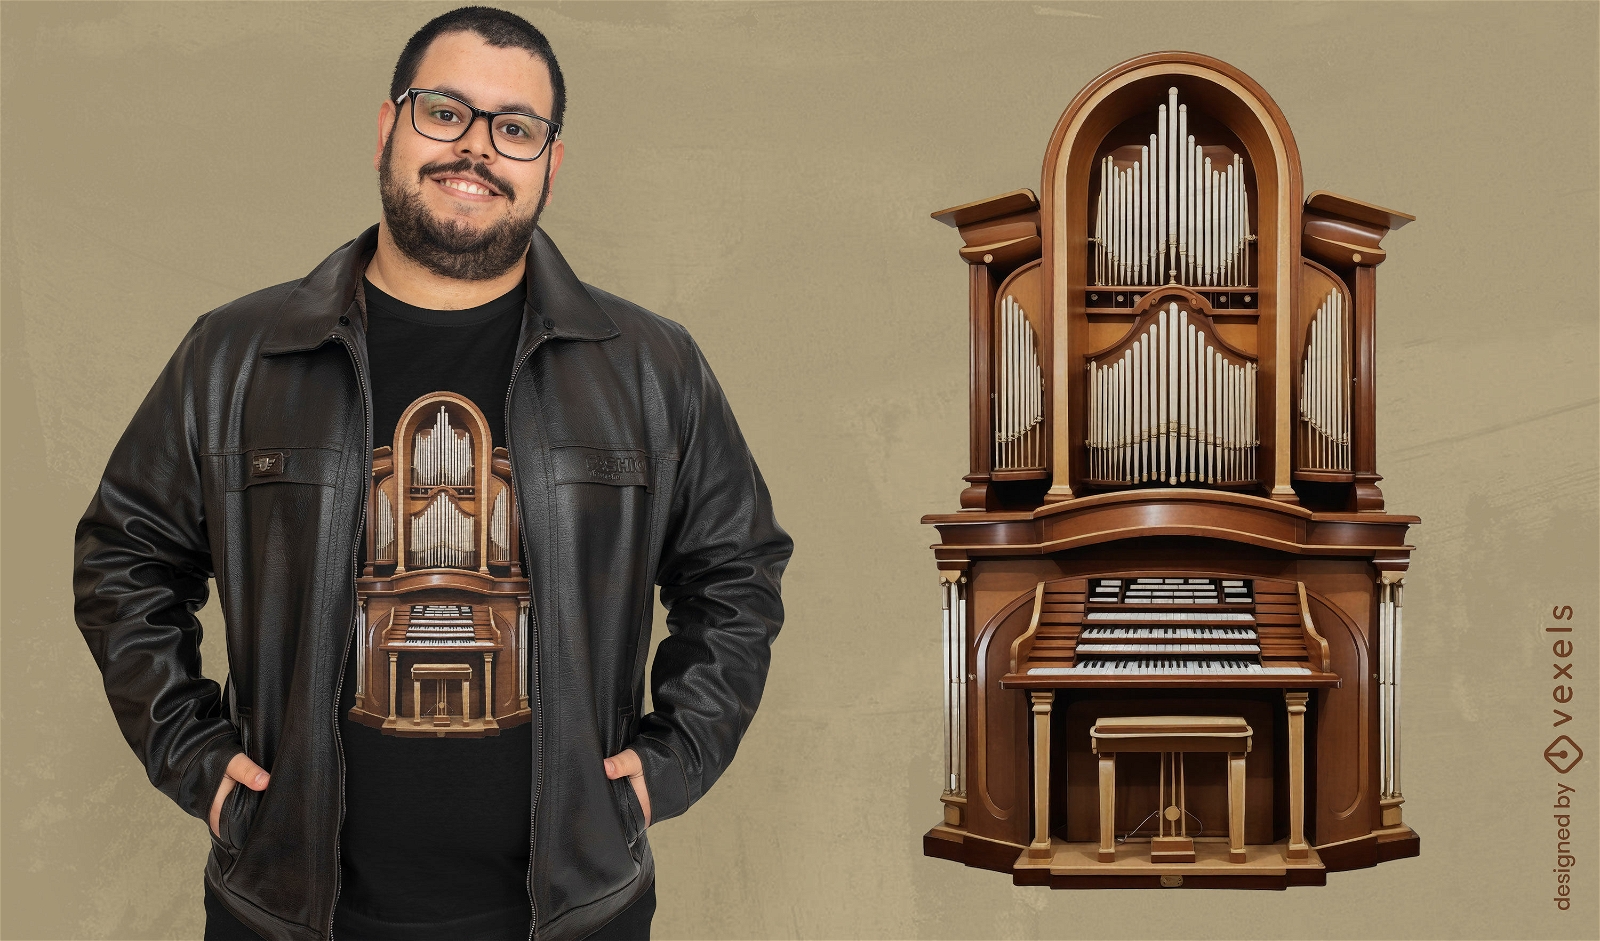 Church organ illustration t-shirt design